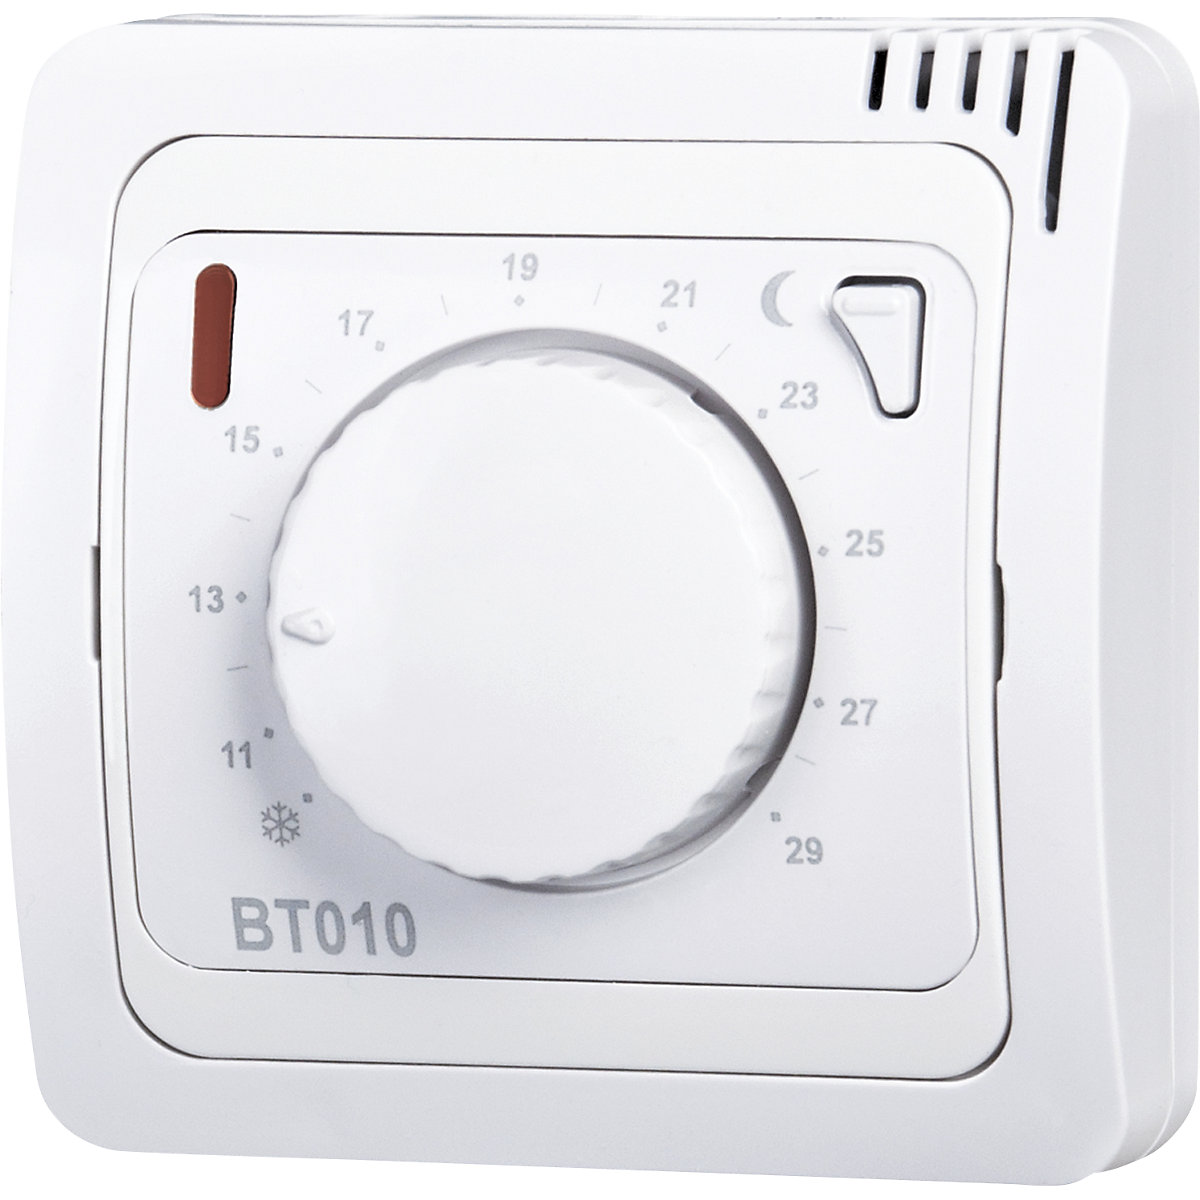 BT010 wireless room thermostat